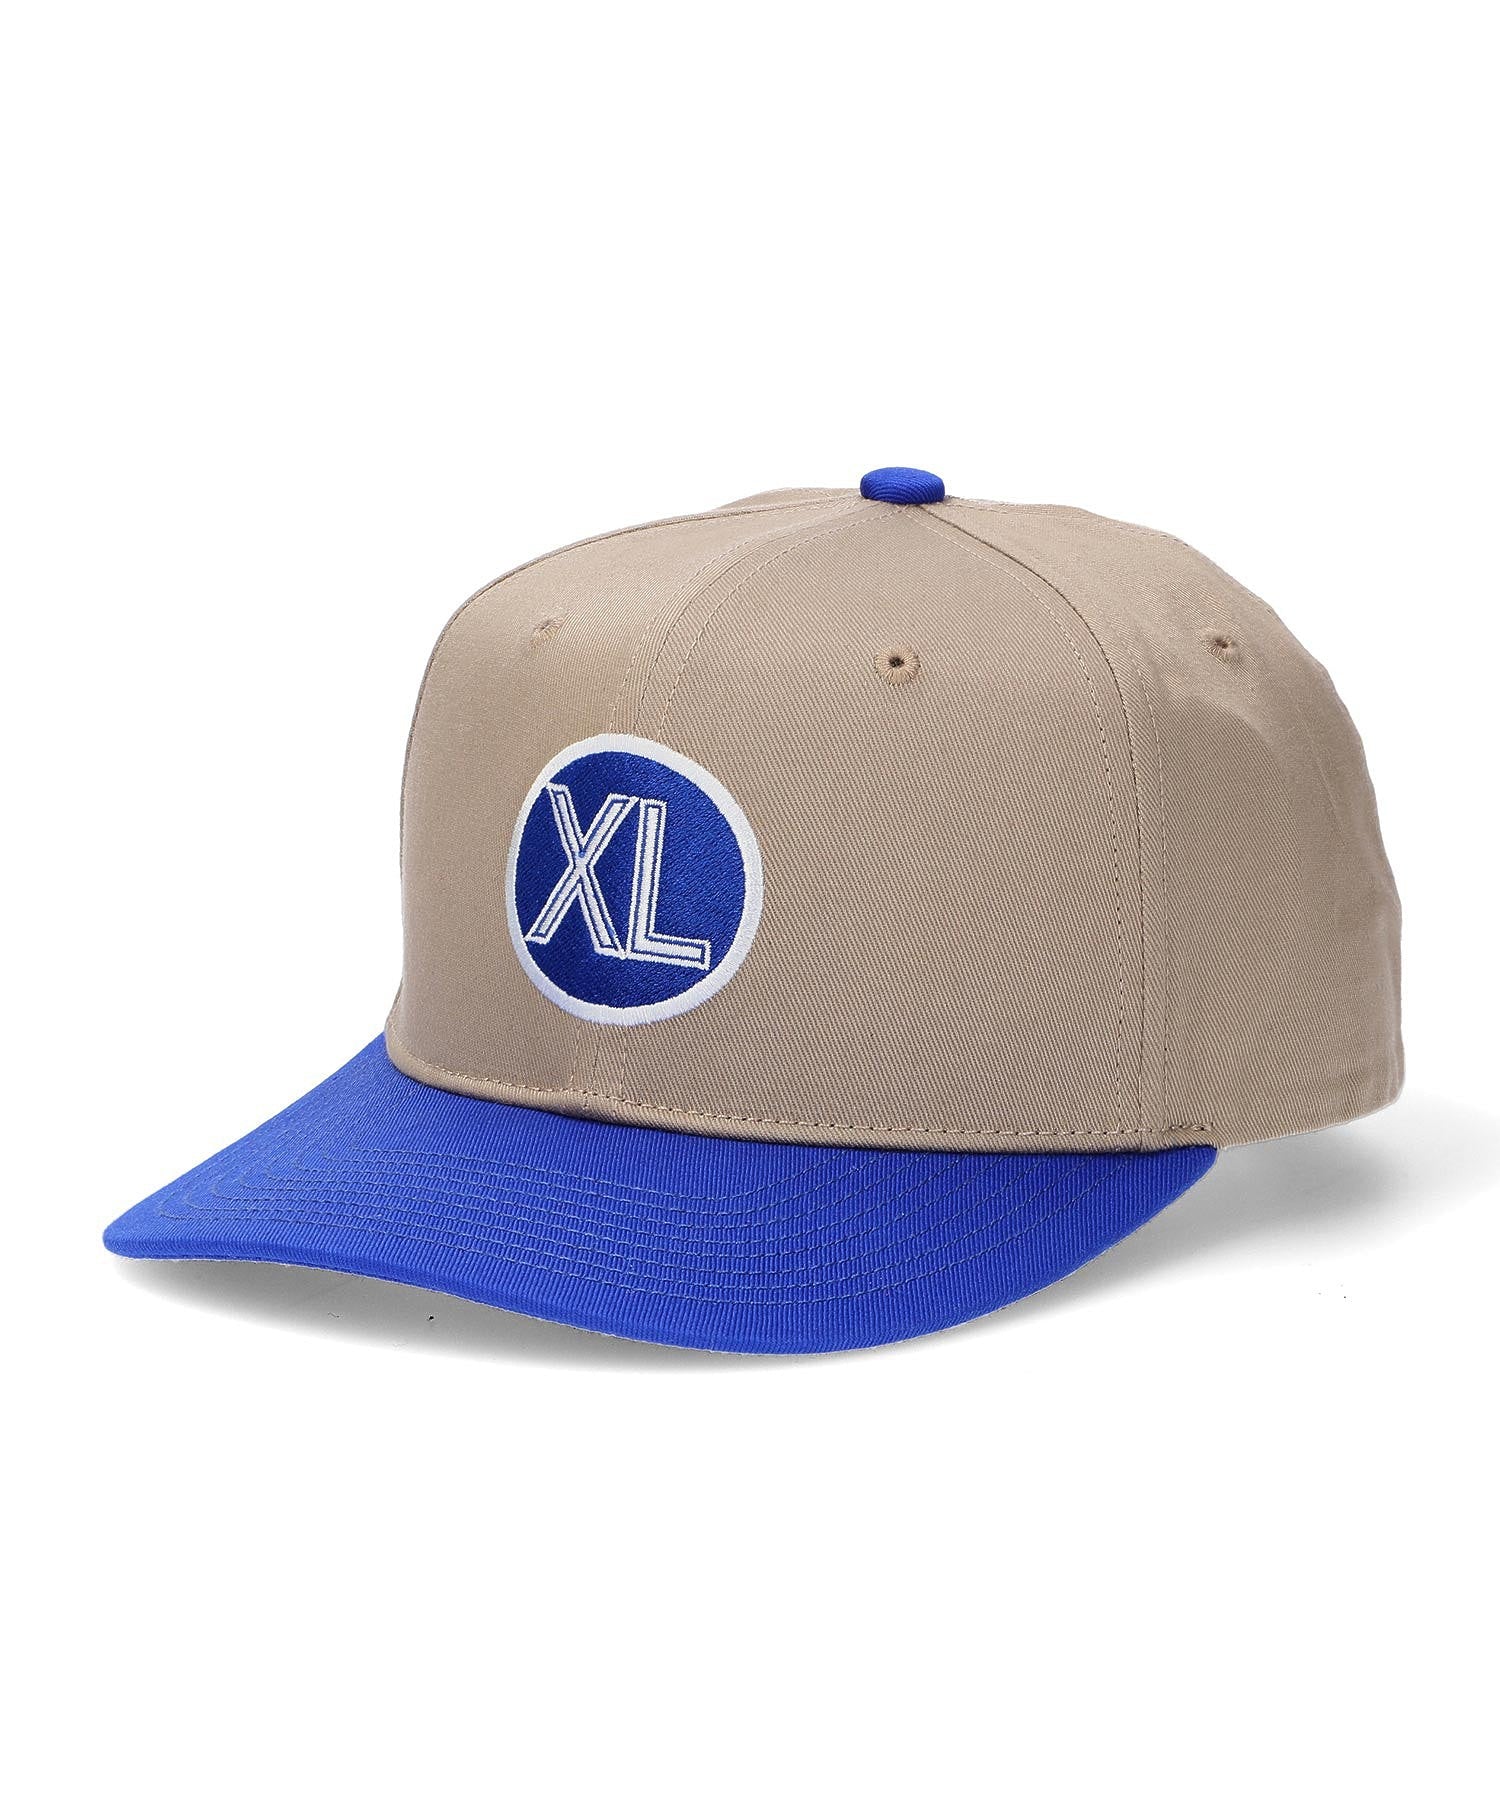 CIRCLE XL CAP XLARGE